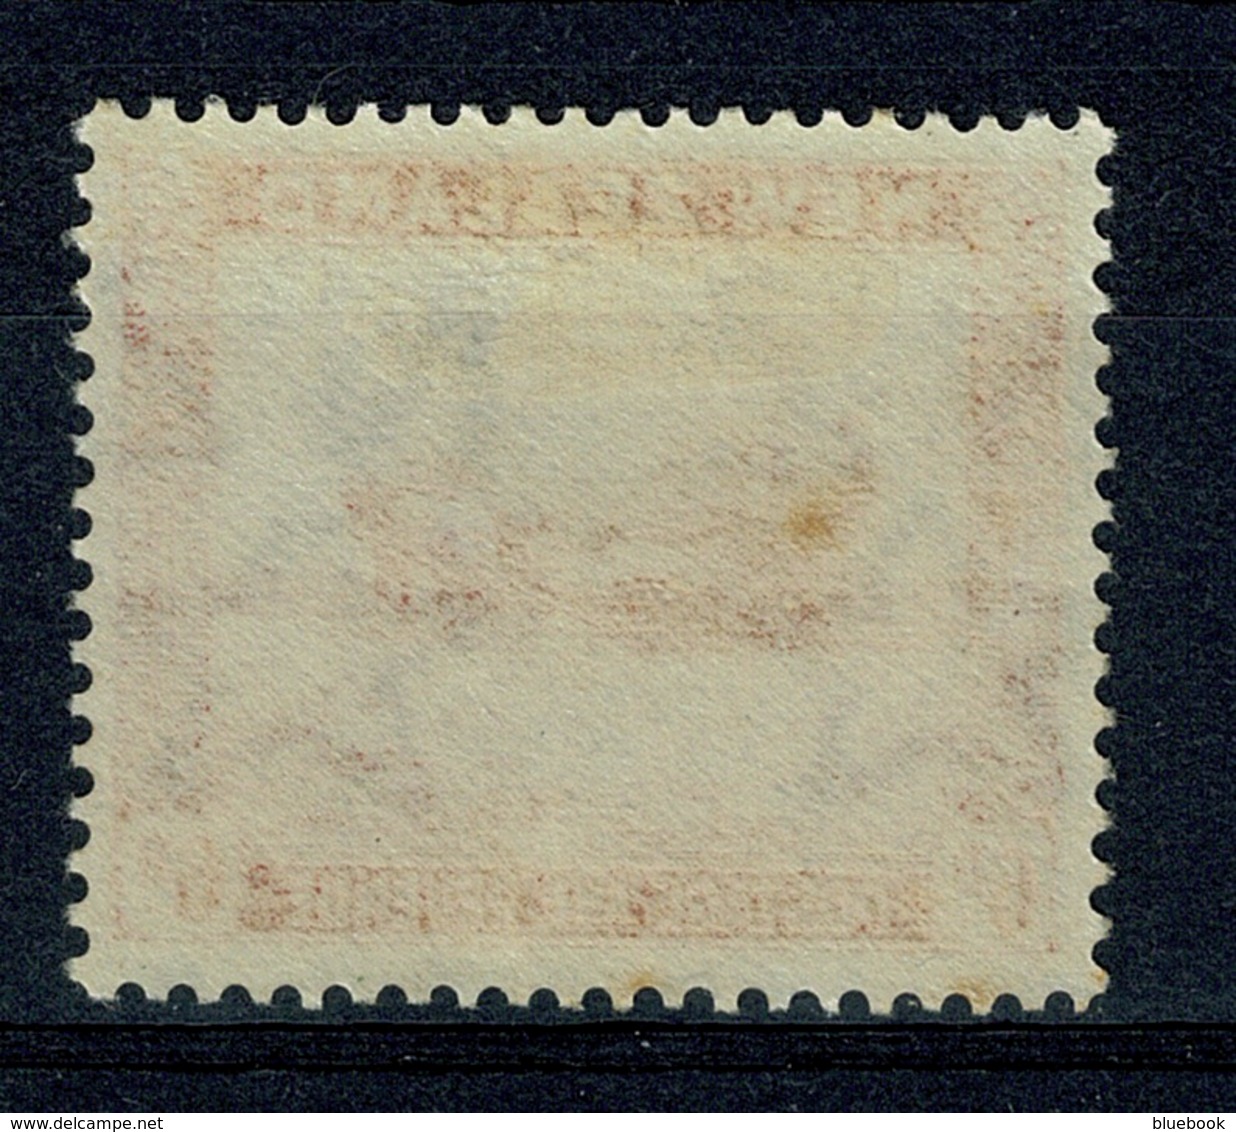 Ref 1282 - New Zealand 1942 KGVI - 6d SG 585c Perf 14.5 X 14 Mint Stamp - Neufs